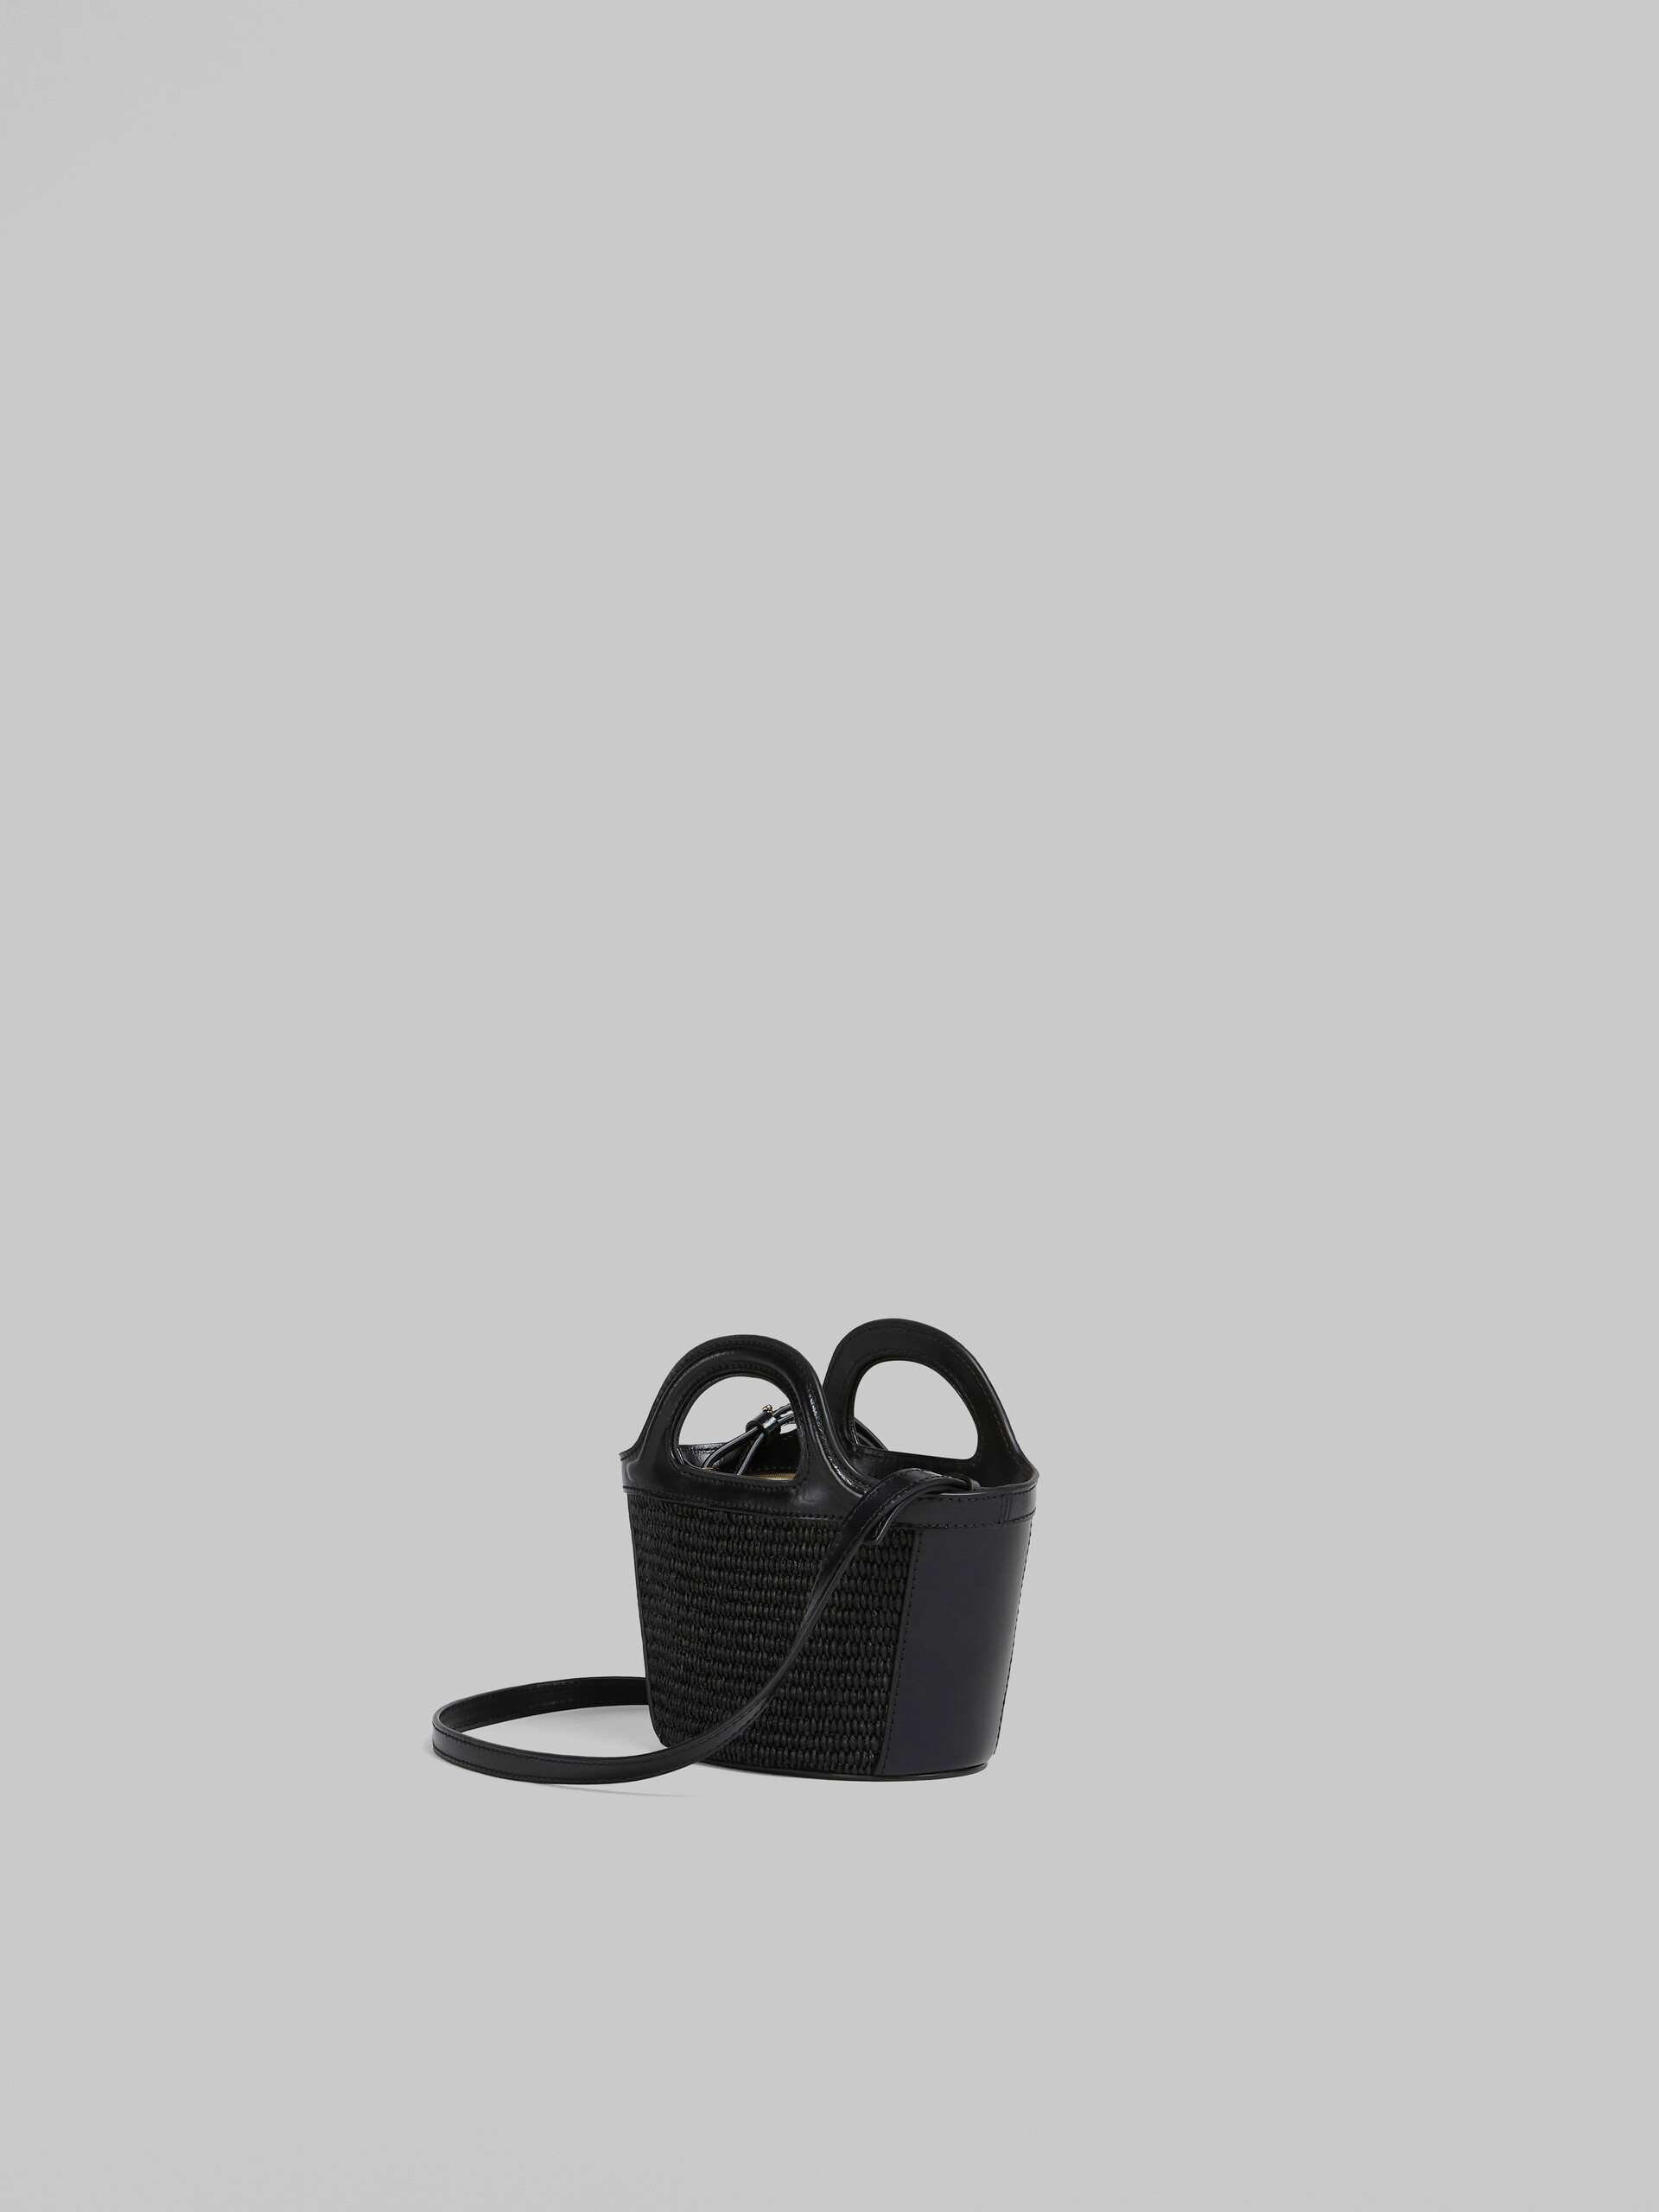 TROPICALIA micro bag in black leather and raffia - Handbag - Image 3